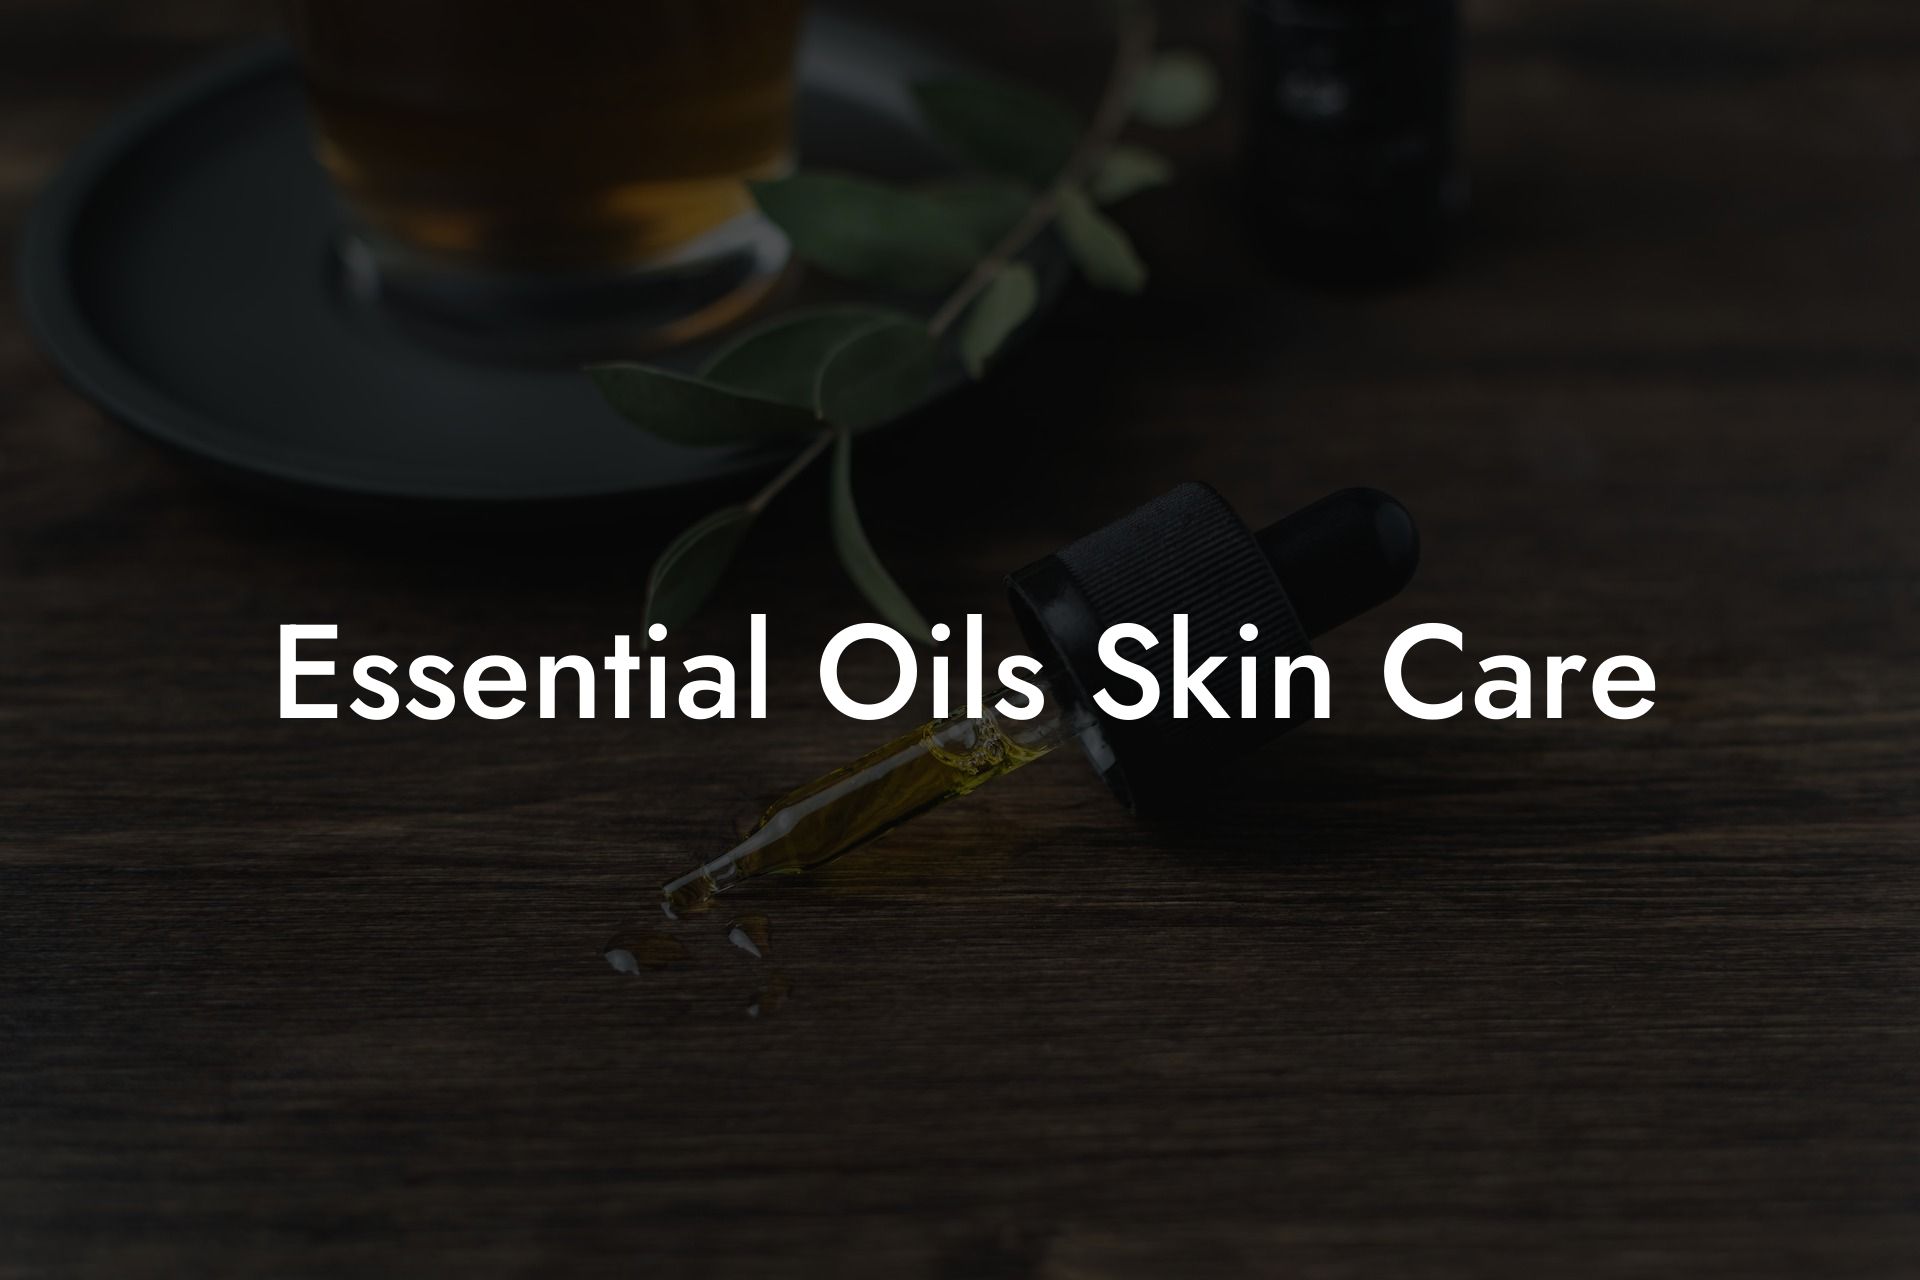 Essential Oils Skin Care